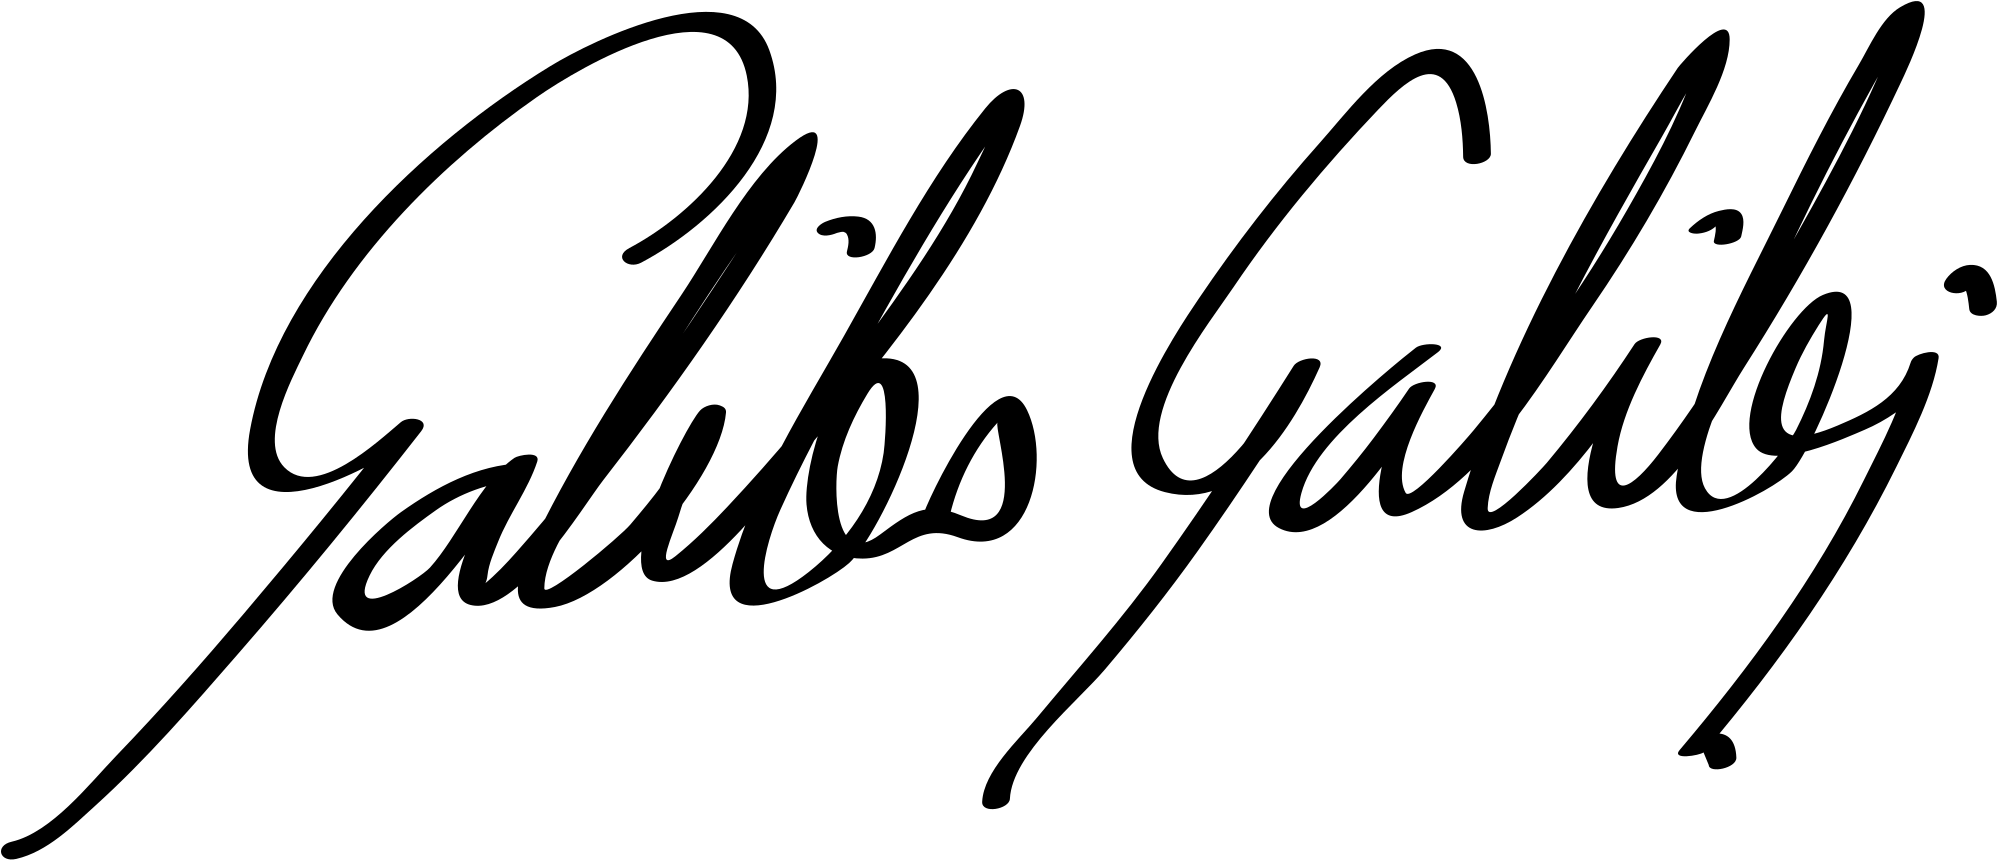 Open - Galileo Signature (2000x871)